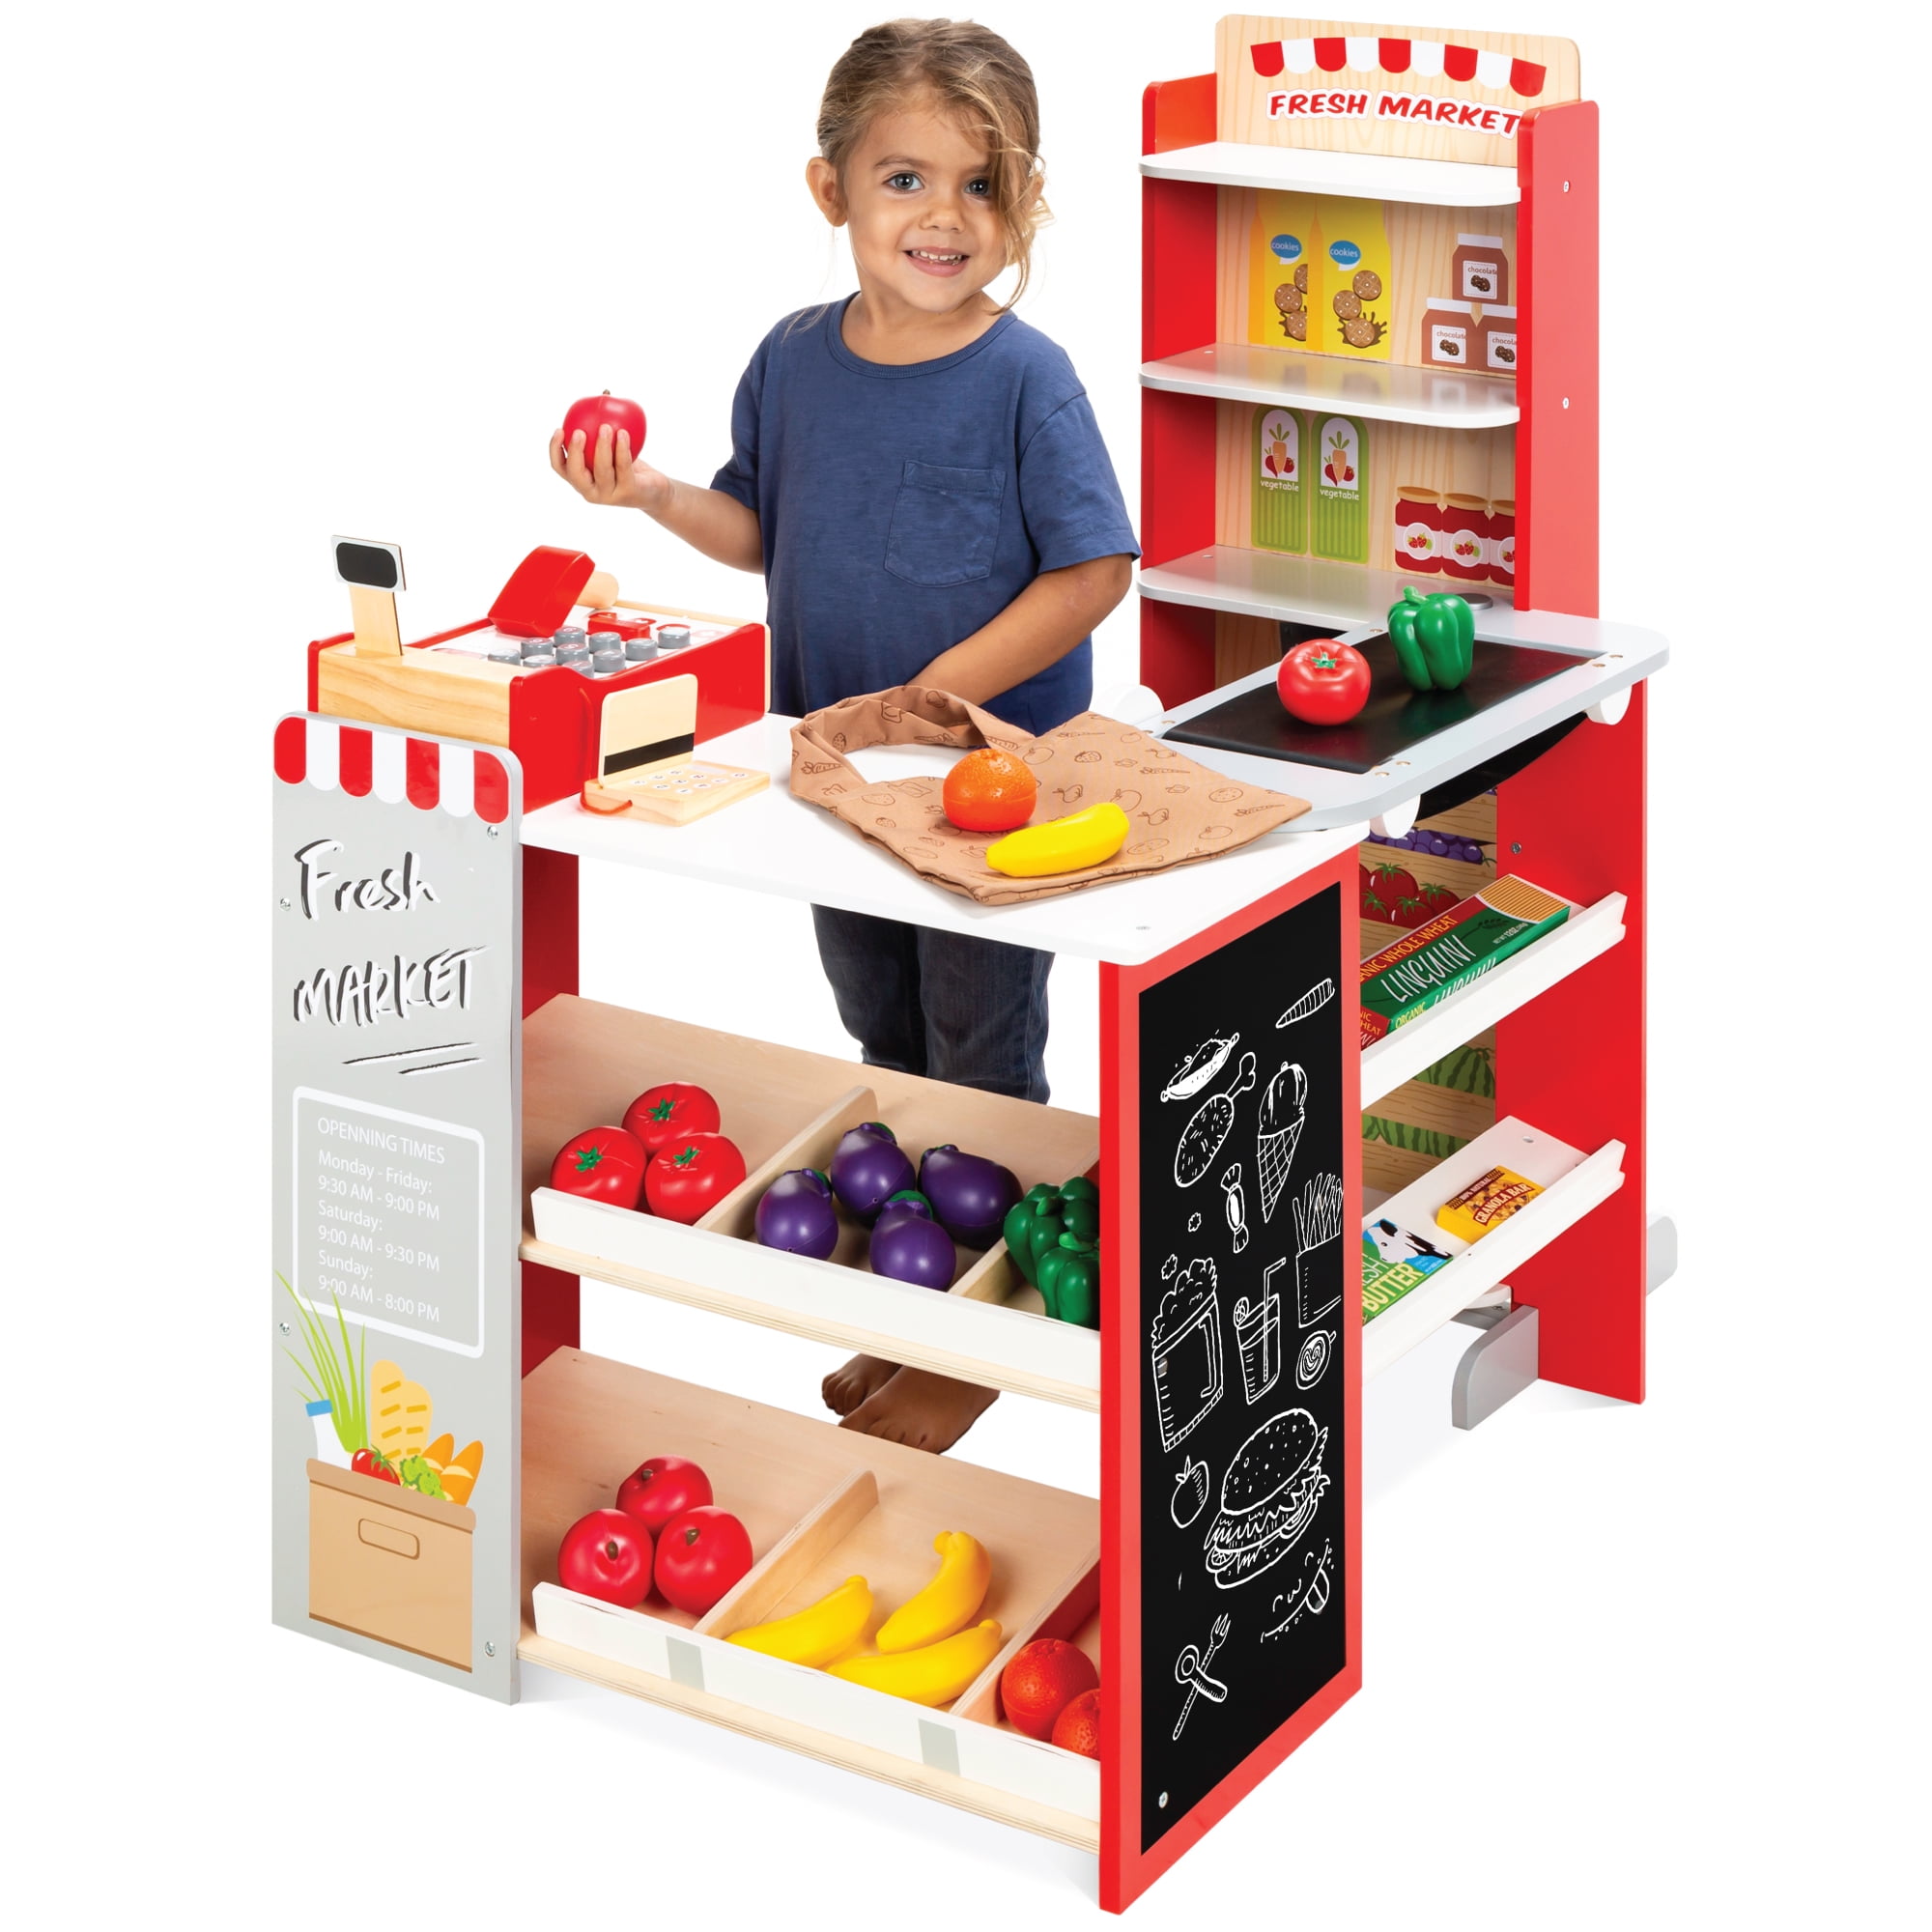 Children Shopping Trolley Cart Play Food Set Kids Pretend Shop Push Along Toy 